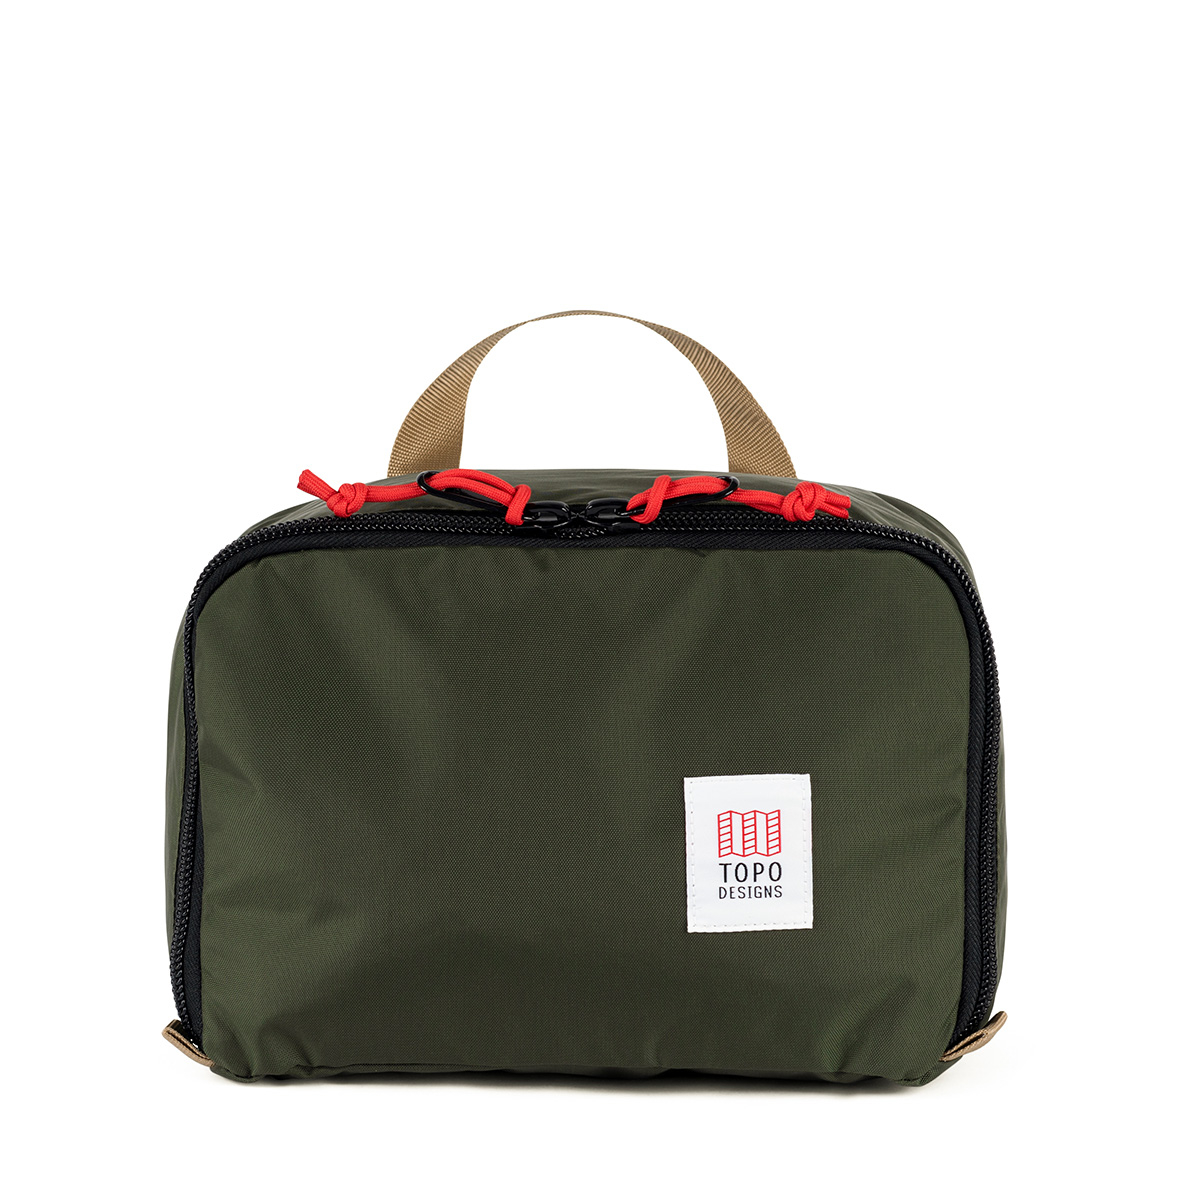 Topo Designs Pack Bag 10L Cube Olive, het optimaliseren van je bagage is nog nooit zo eenvoudig geweest